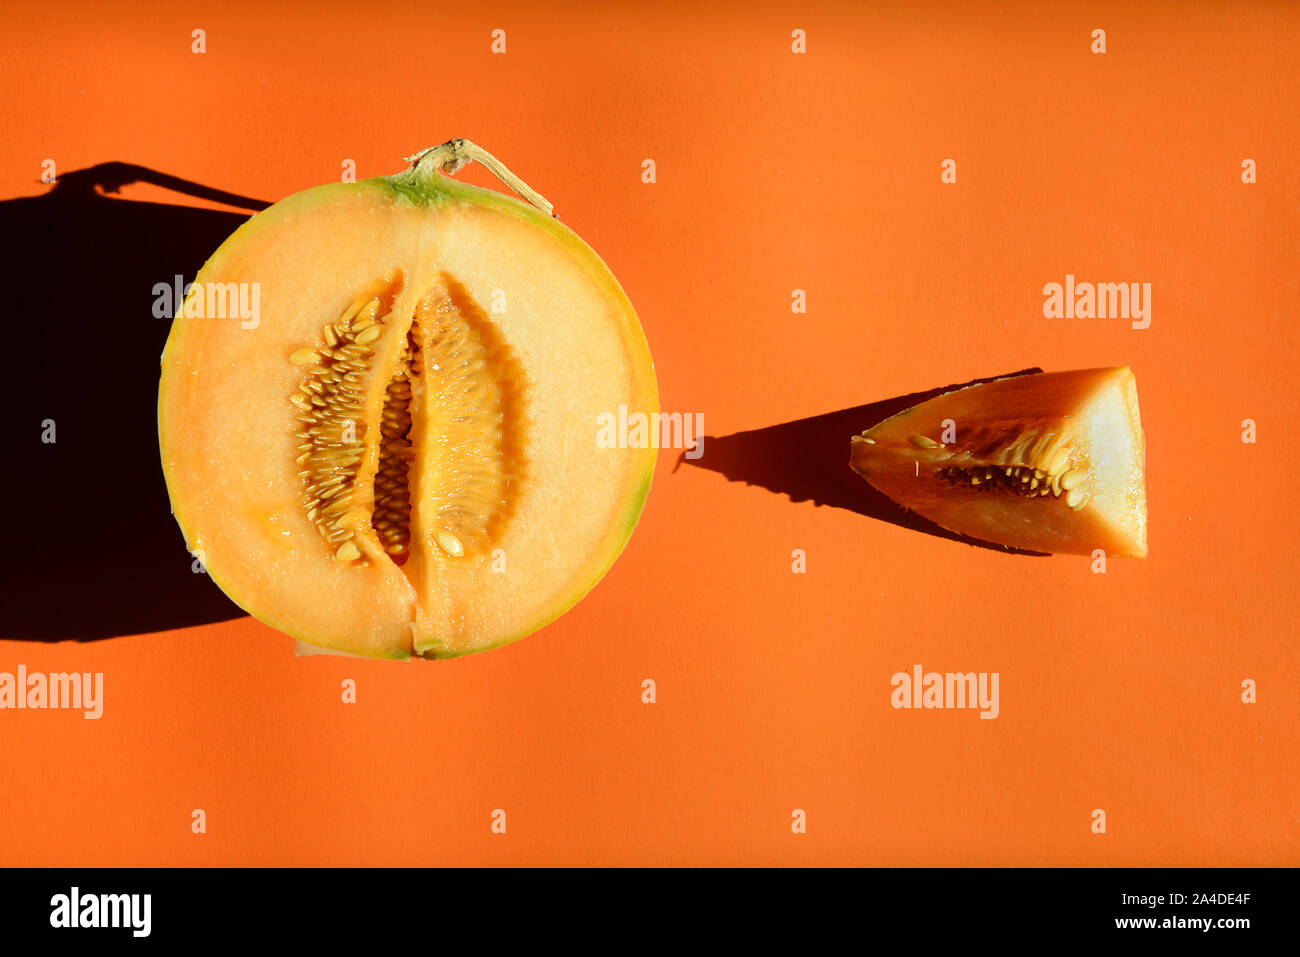 Melon clices sliced  on orange background Stock Photo